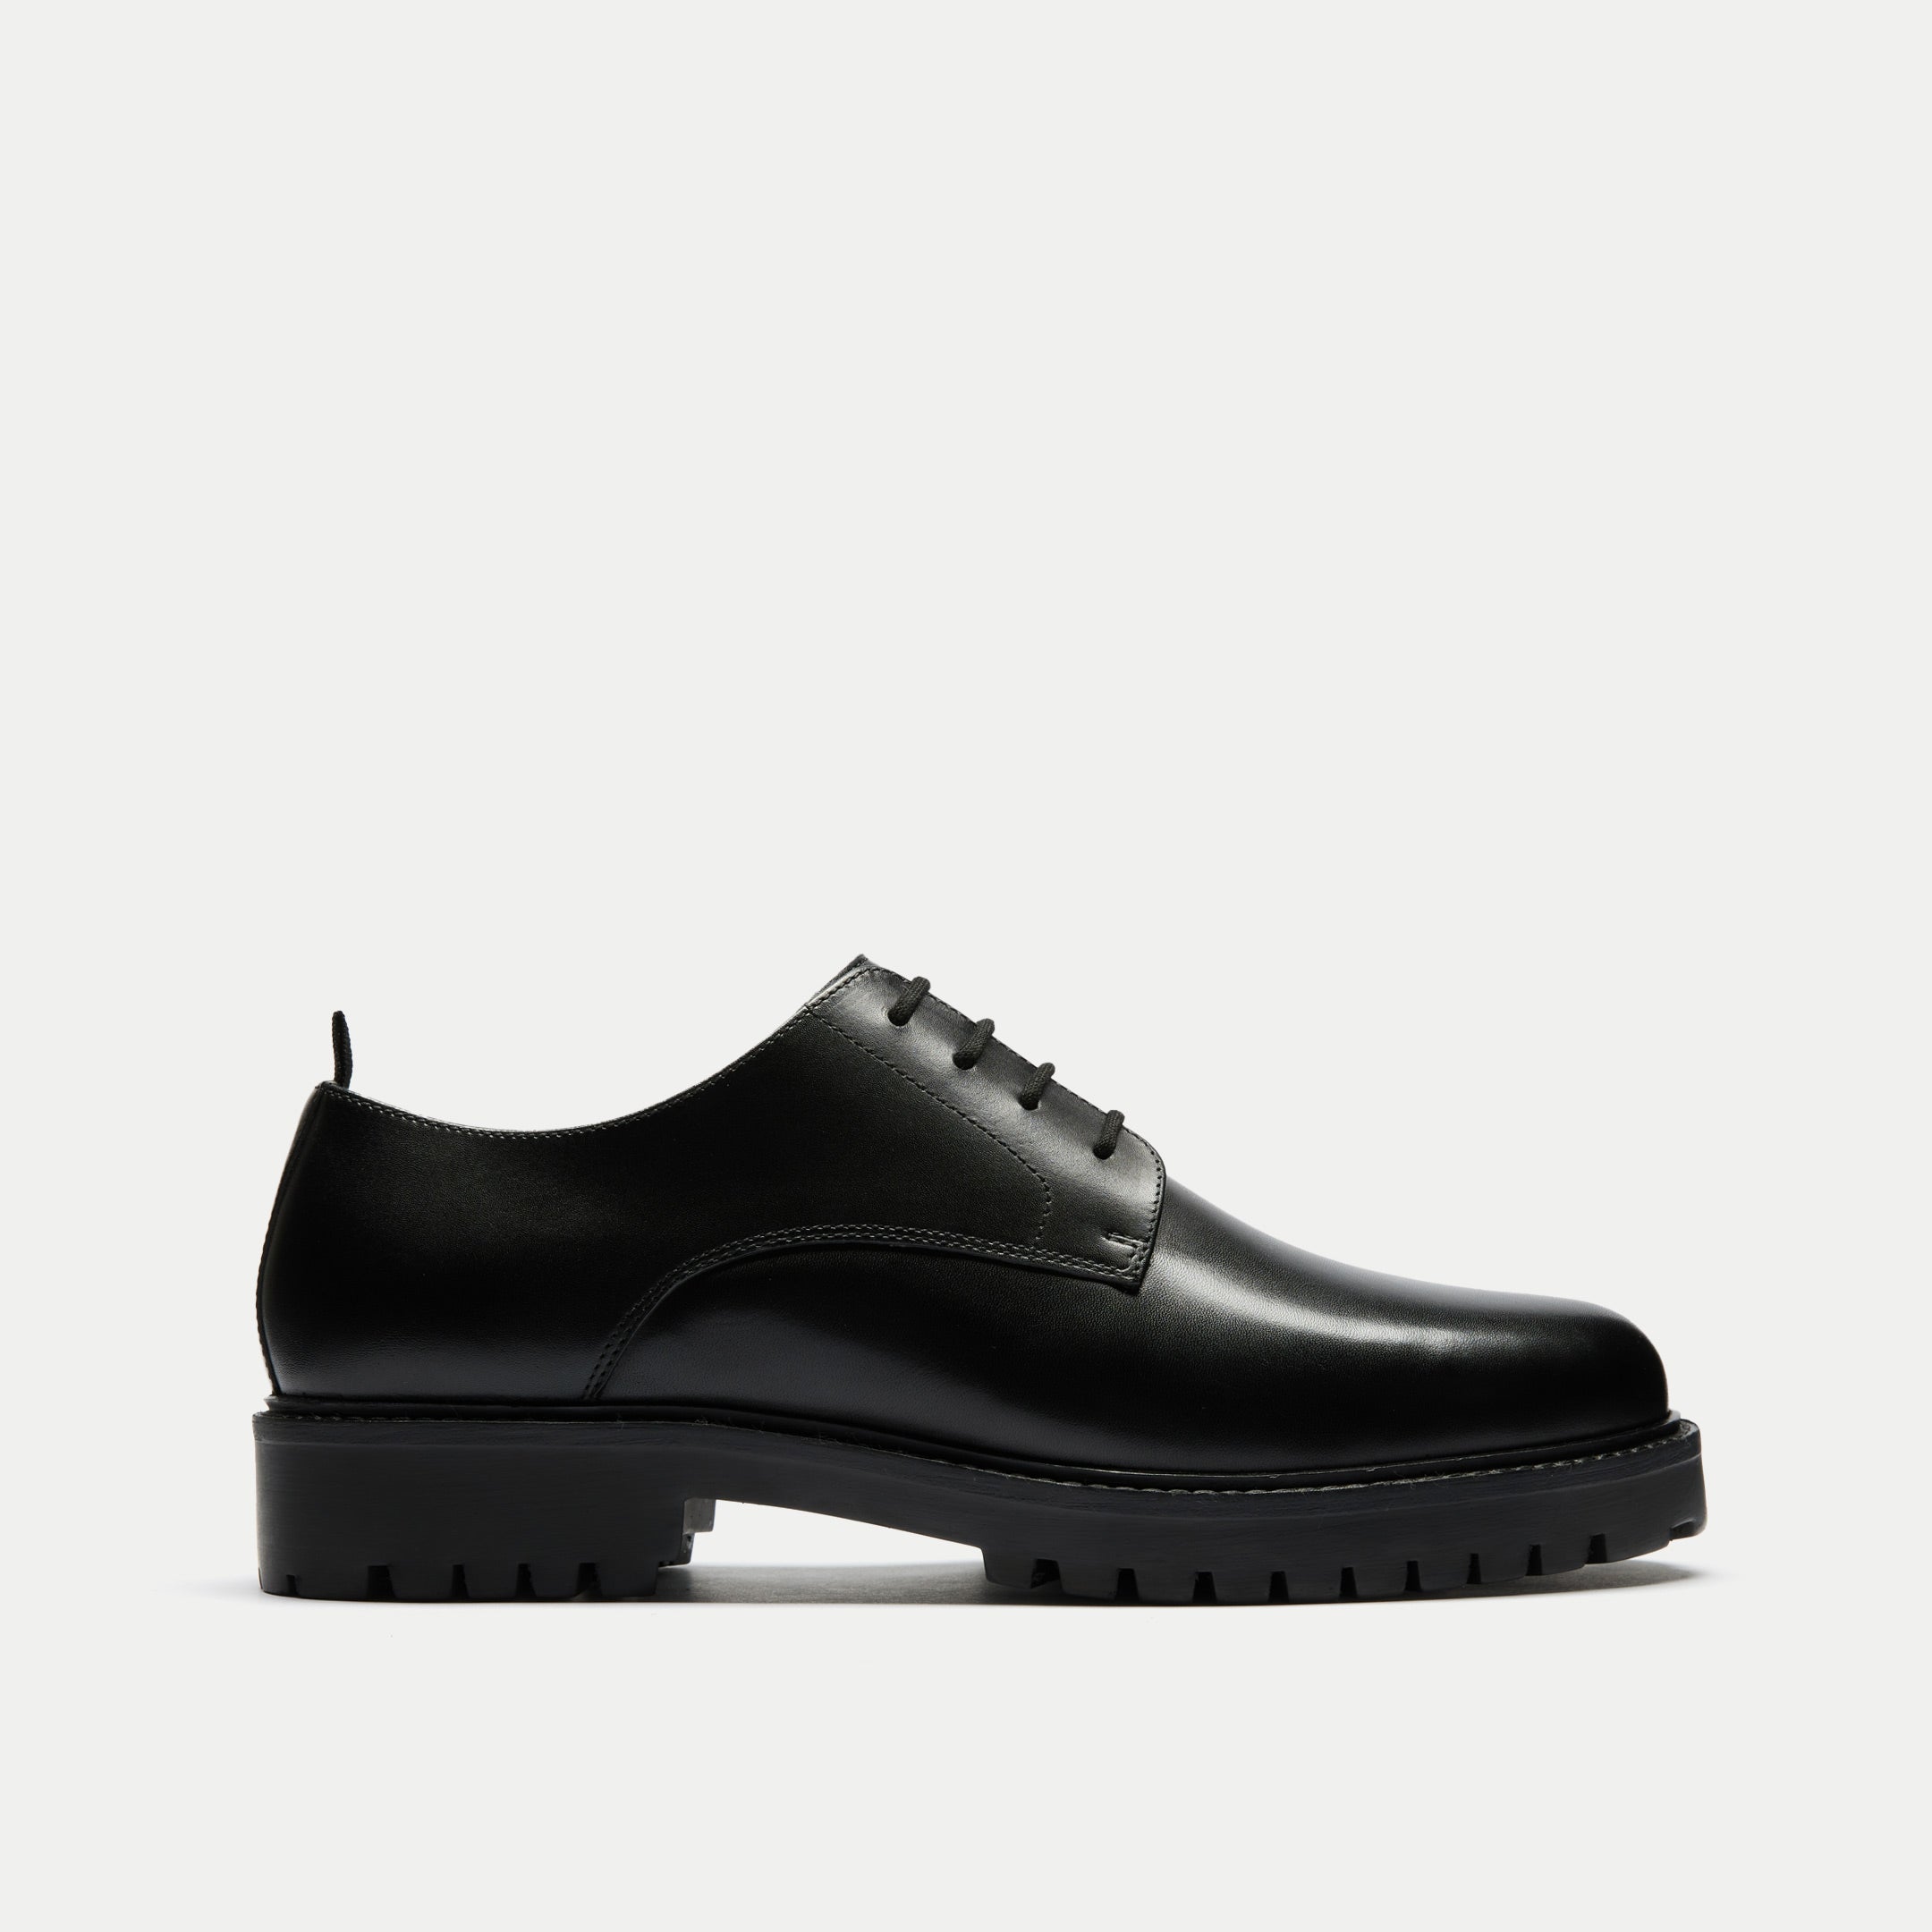 WALK London Mens Sean Derby Shoe Black Leather